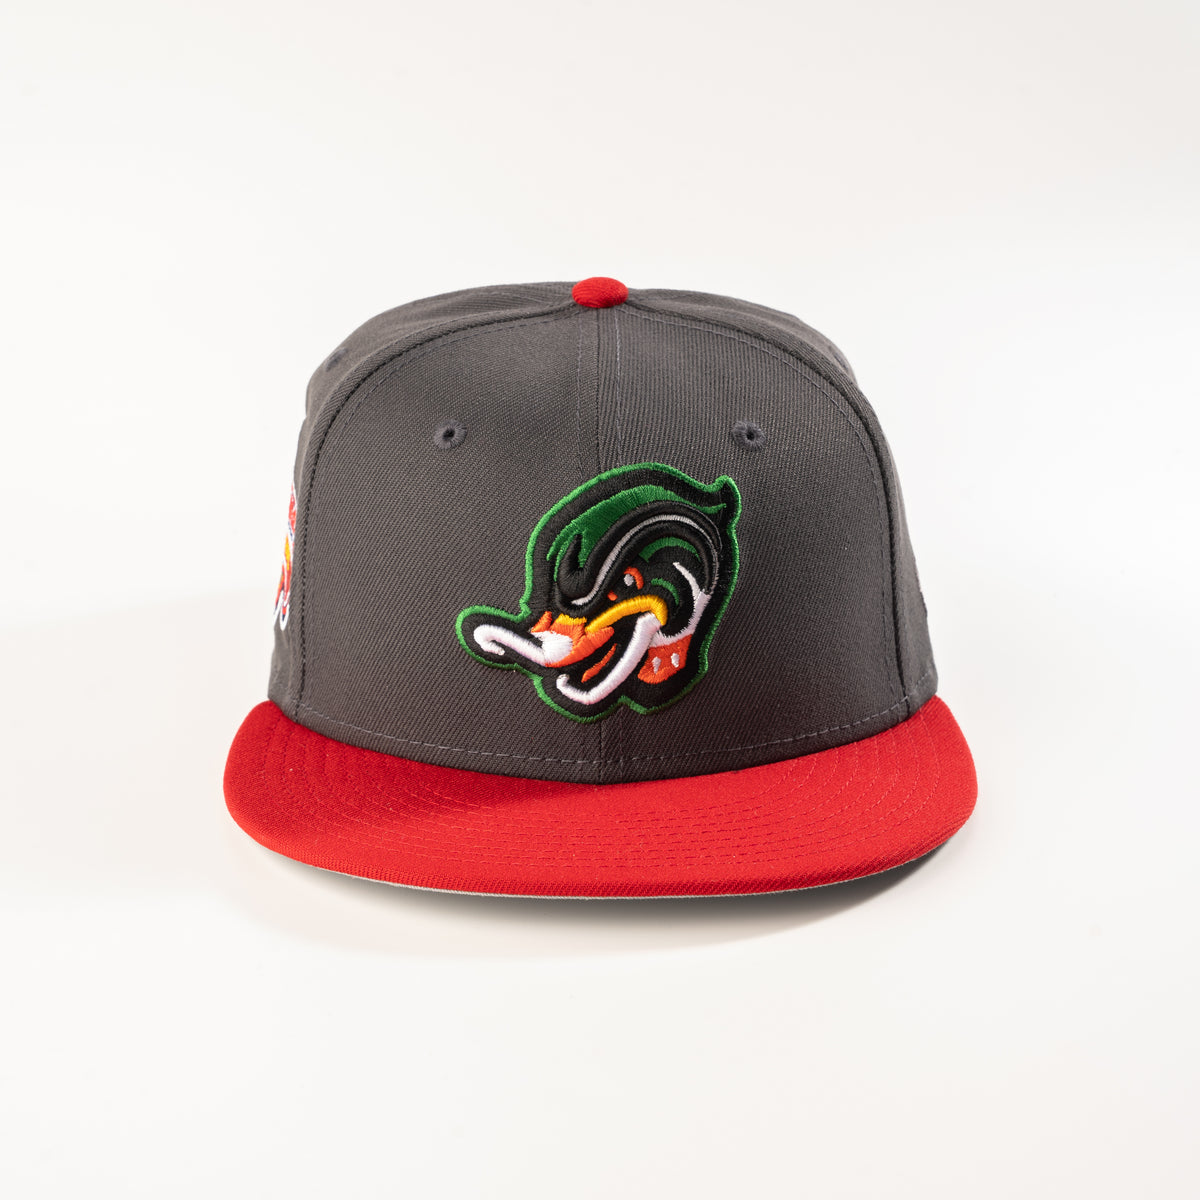 Stylish Black Wood Ducks Fitted Hat